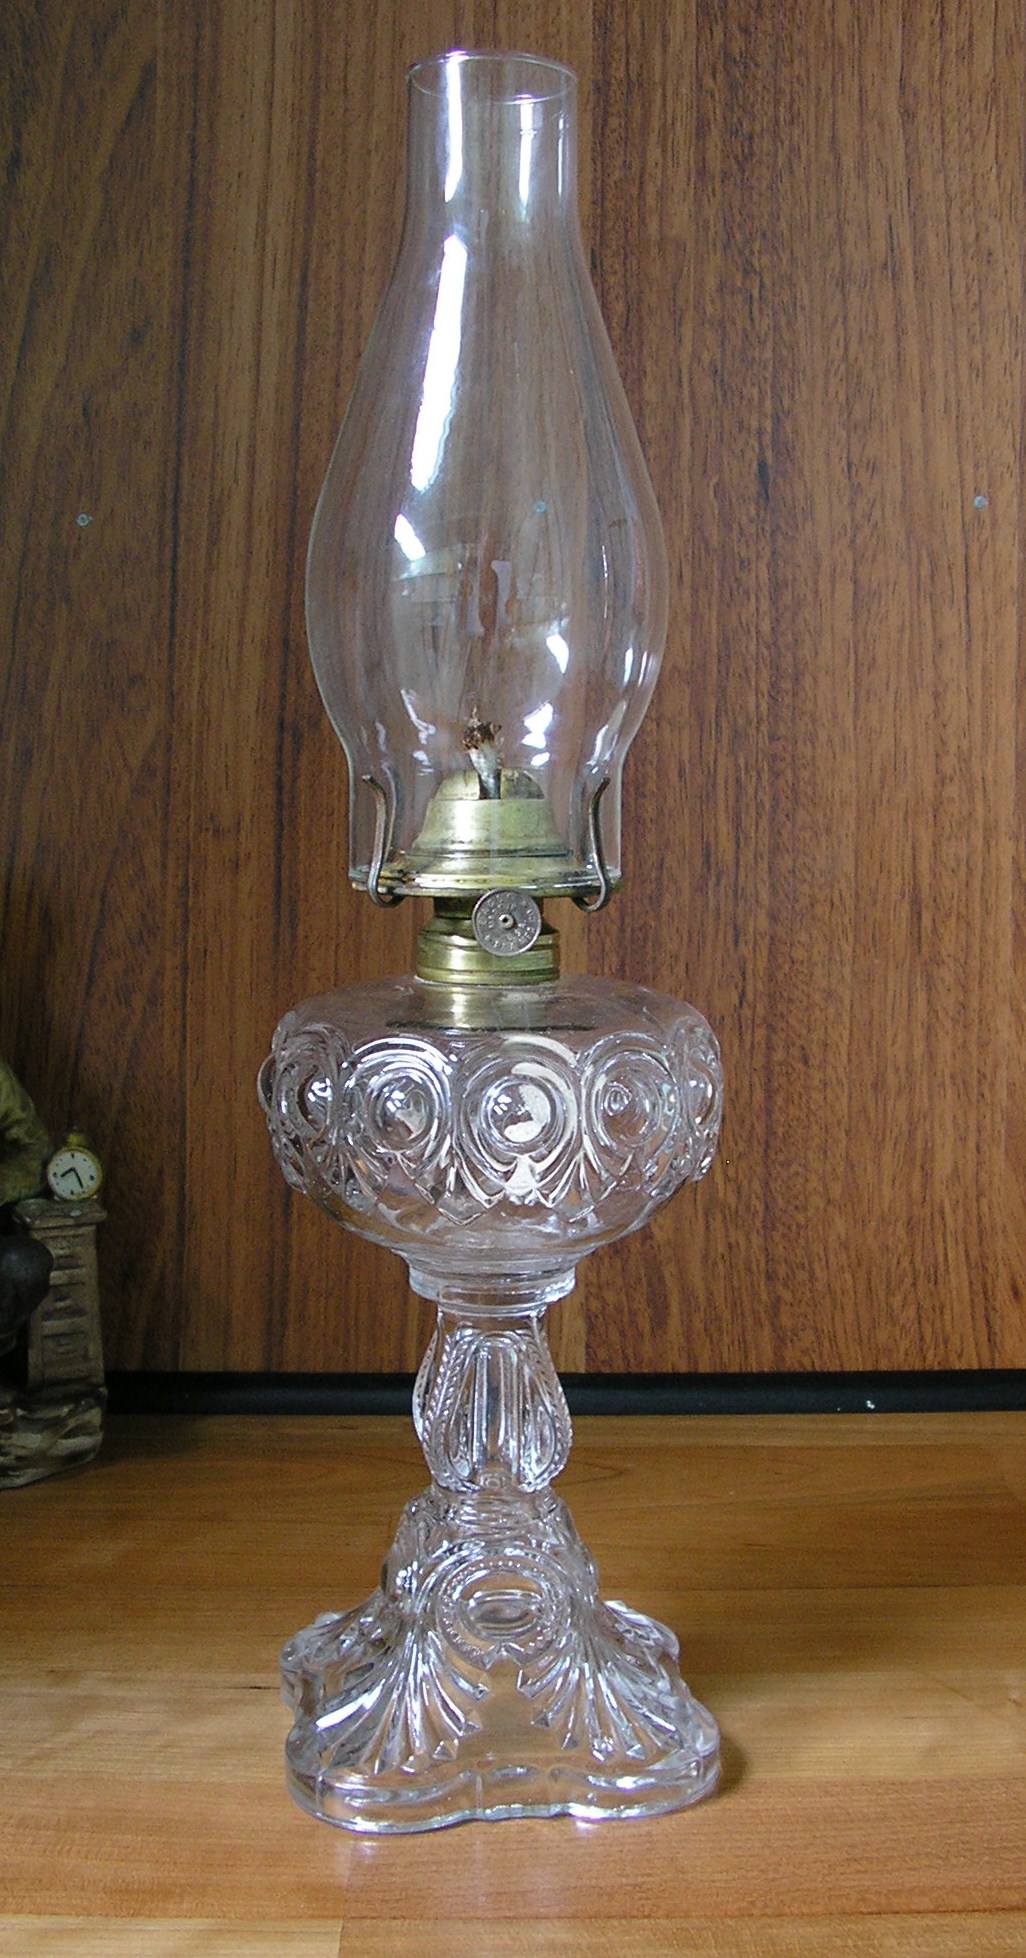 10 Reasons To Buy Antique Oil Lamps Warisan Lighting